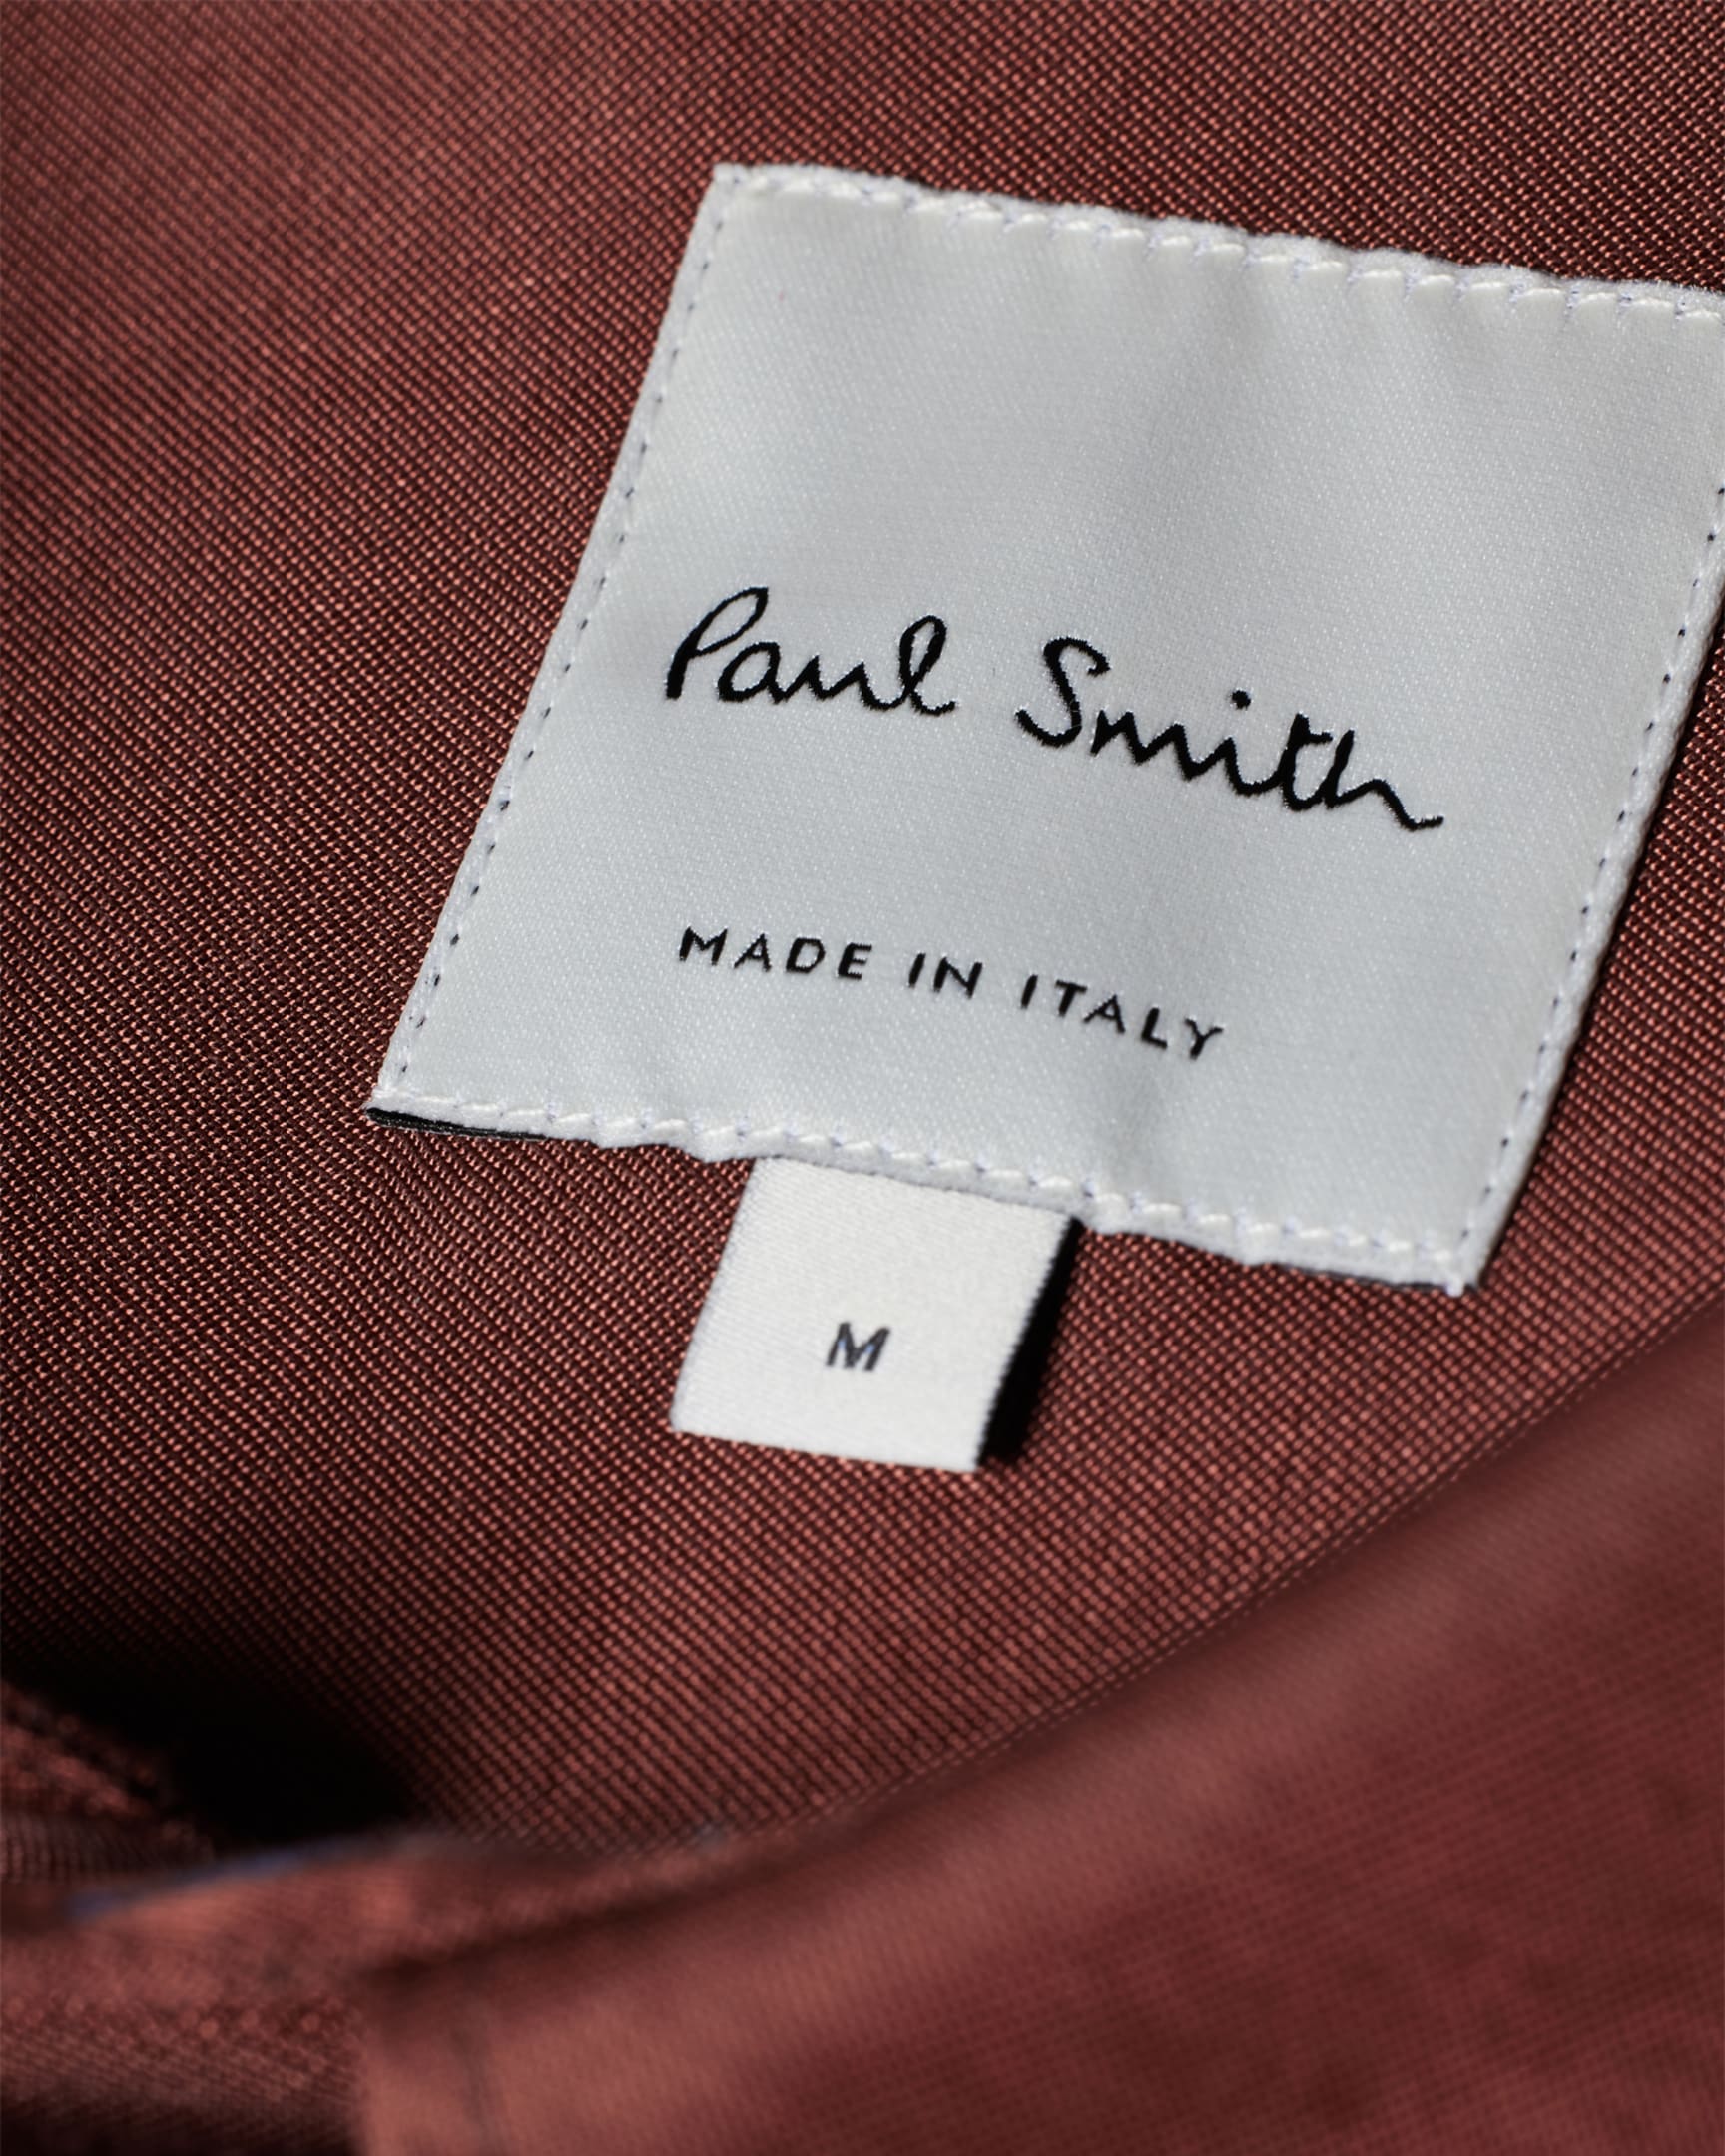 Detail View - Brown Cotton-Viscose Blend Long Sleeve Shirt Paul Smith